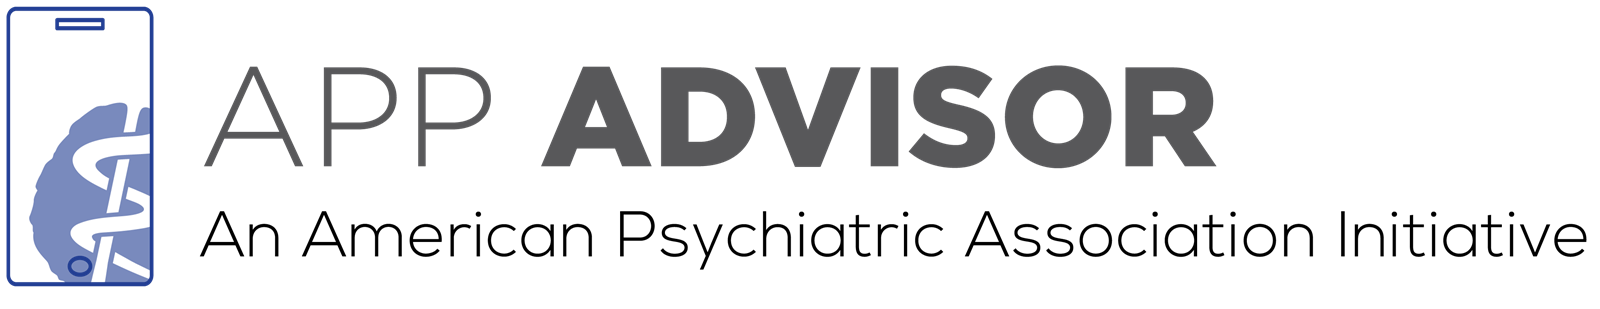 App Advisor Logo An American Psychiatric Association Initiative